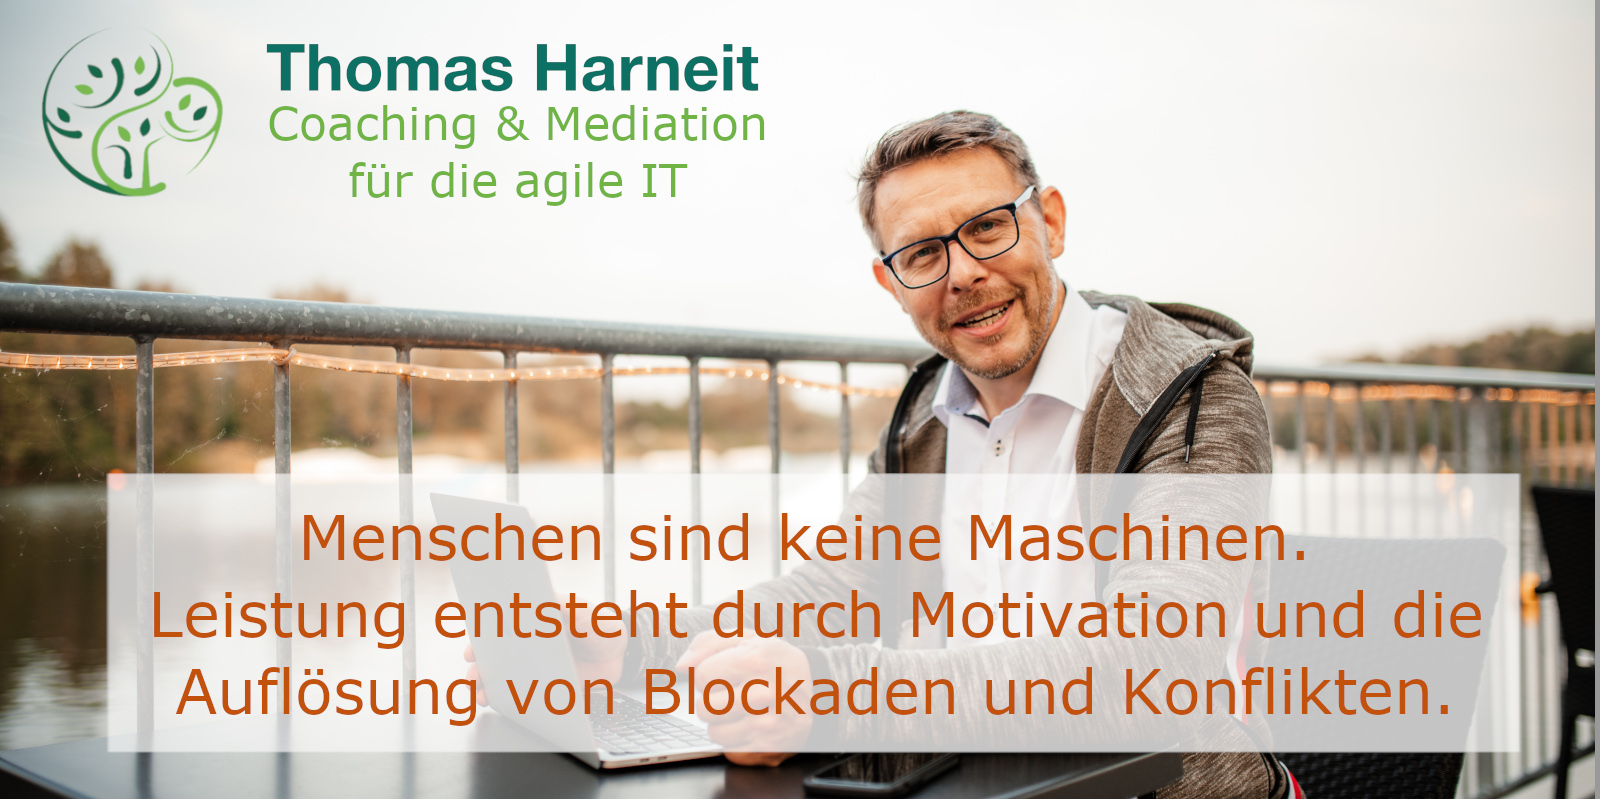 Thomas Harneit - IT business solutions - Coaching, Training & Mediation